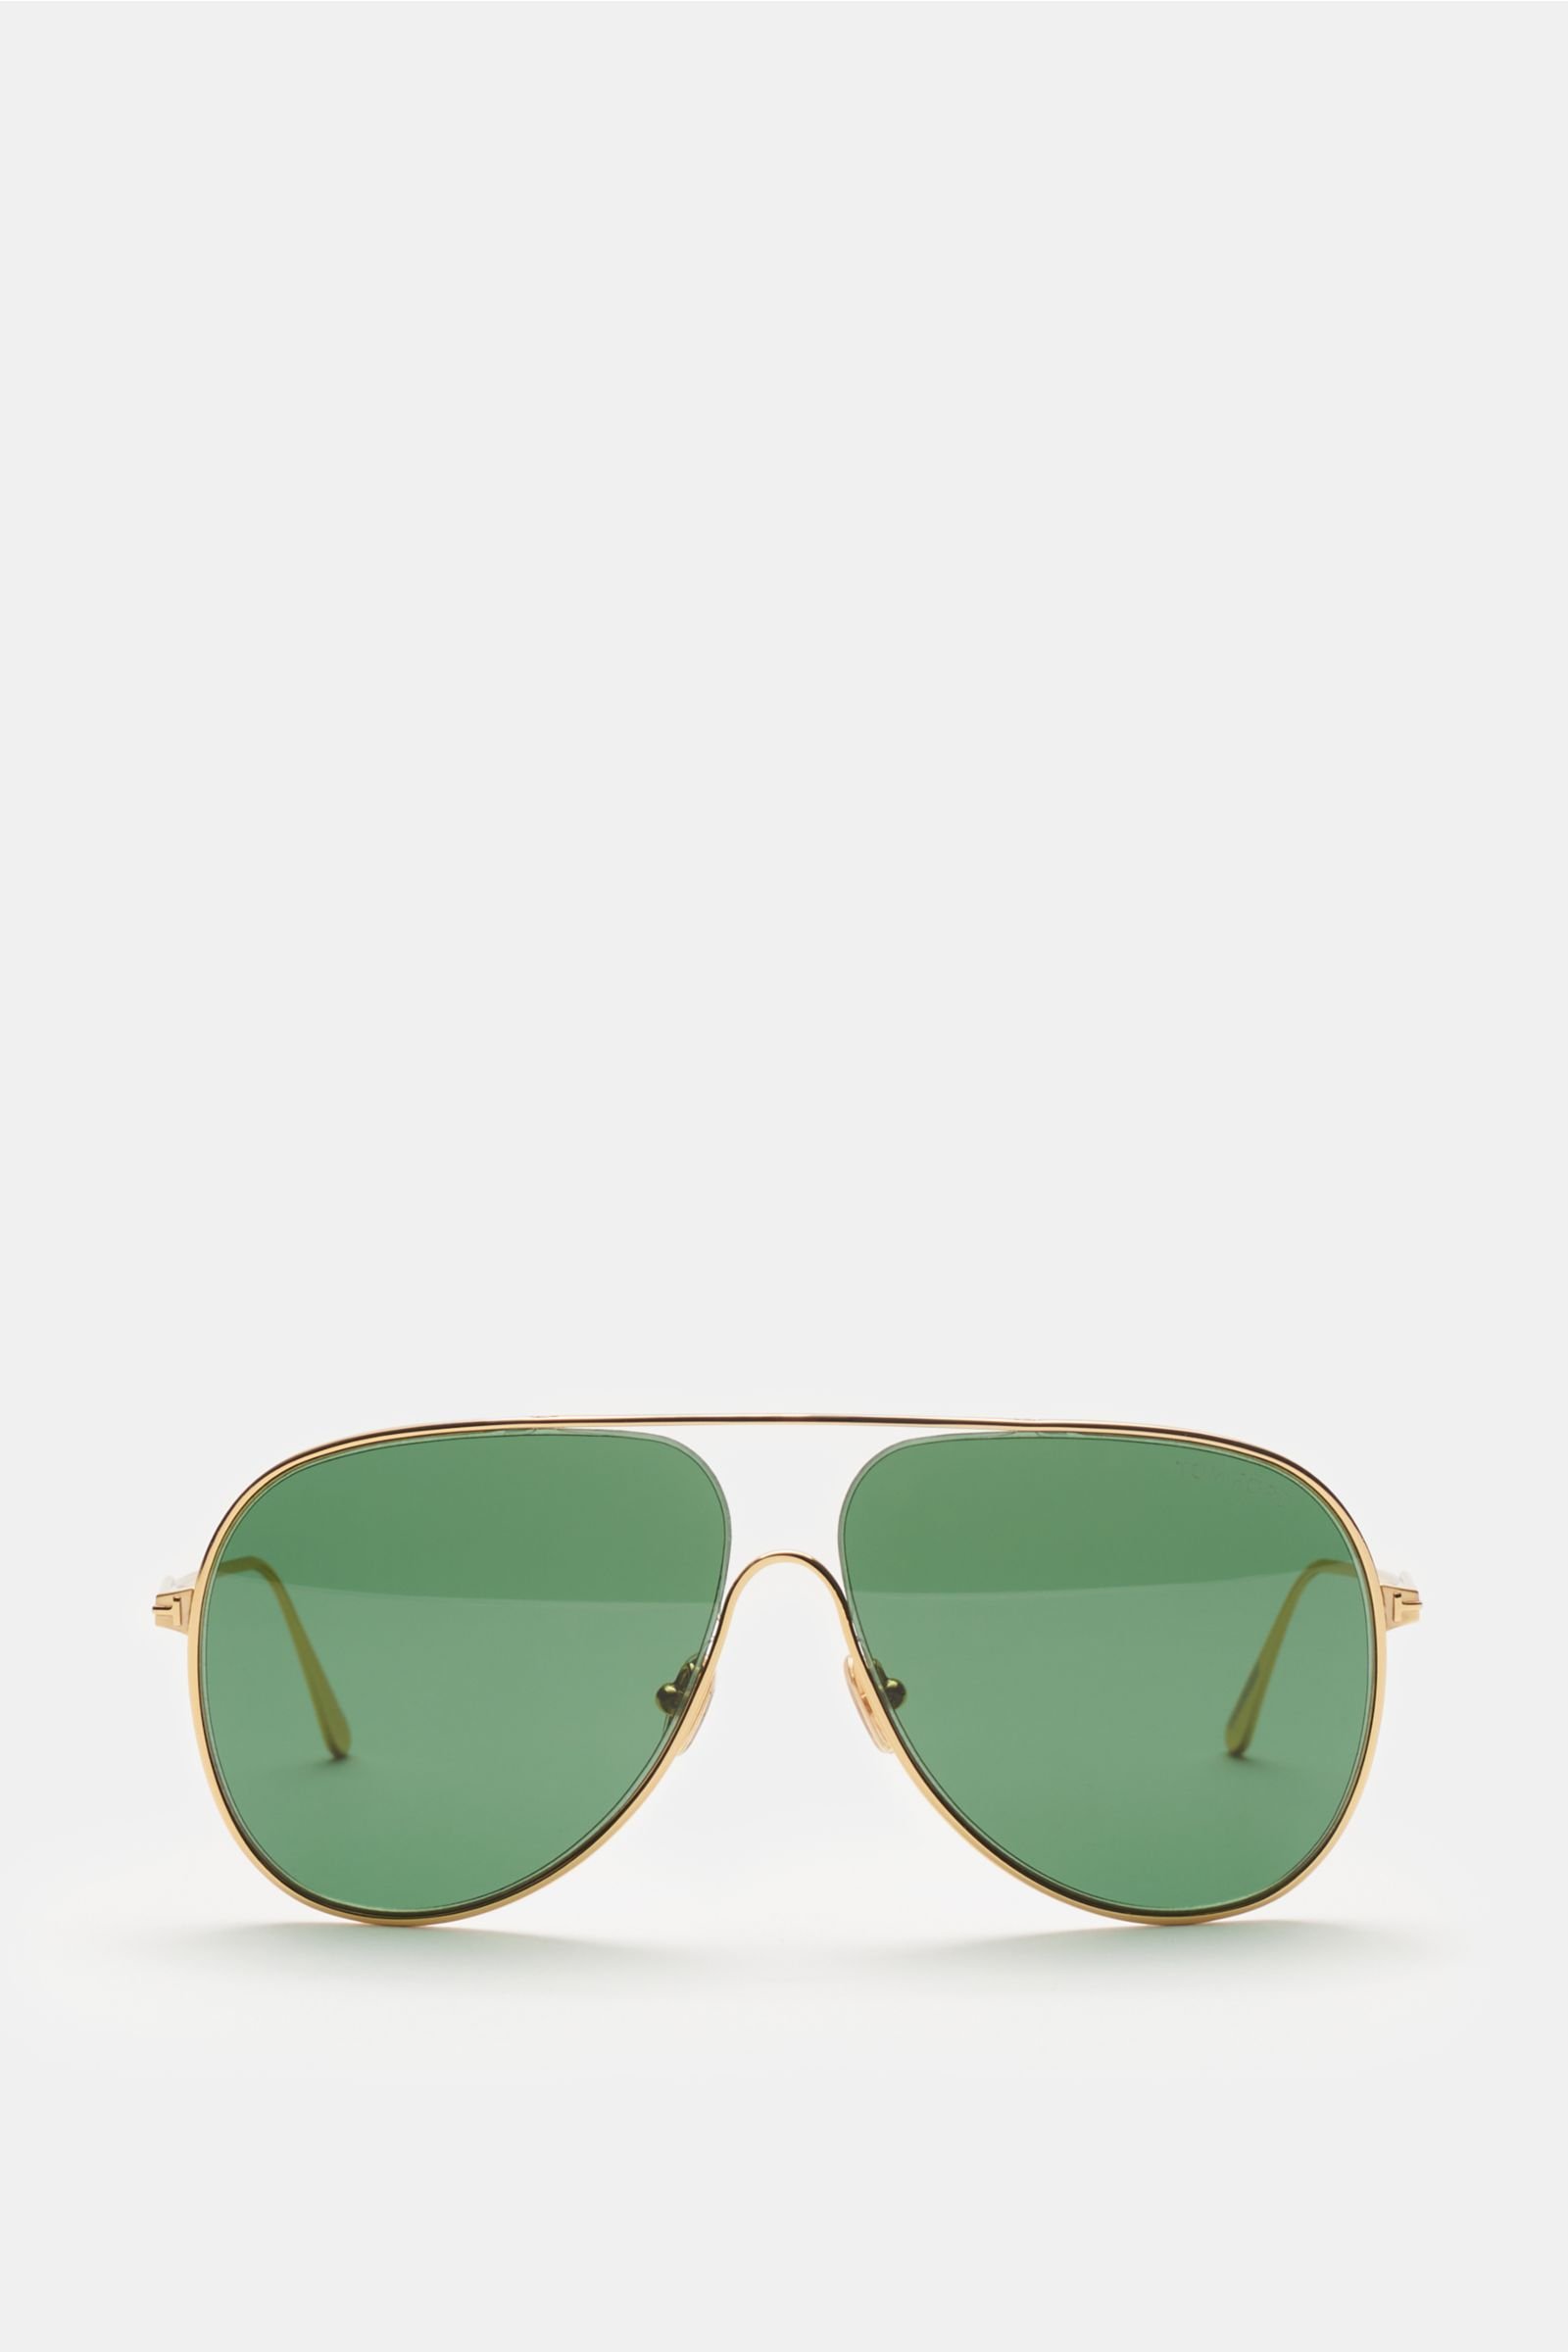 Sonnenbrille 'Alec' gold/grün